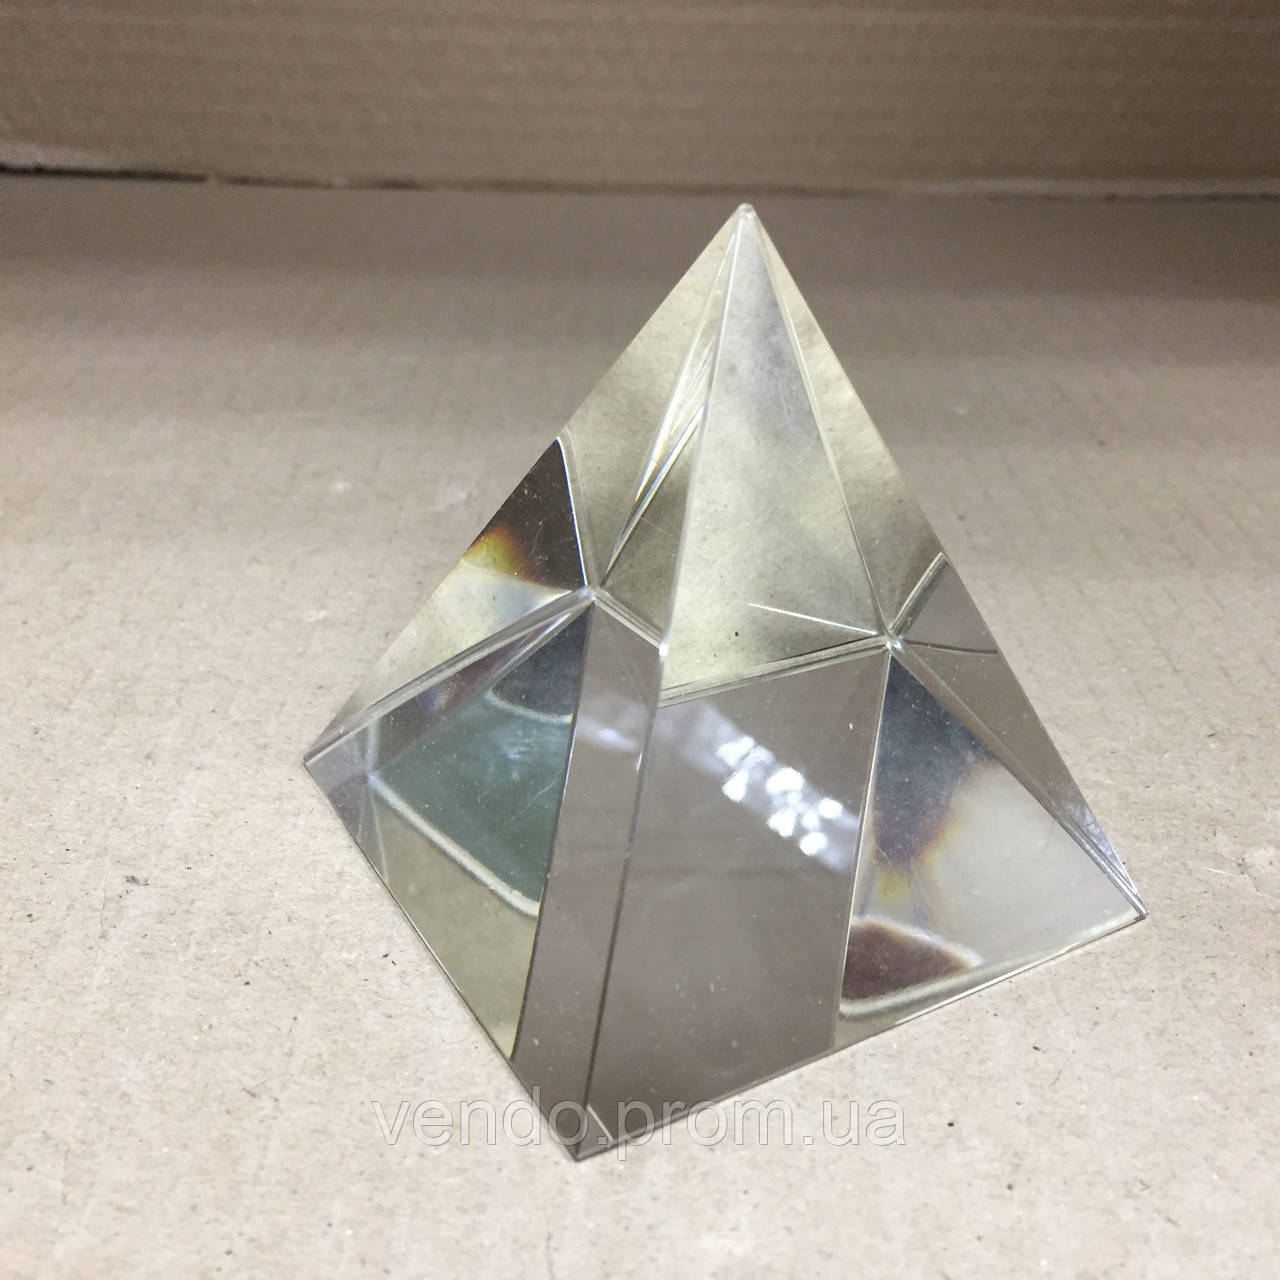 Кришталева піраміда біла 4.9х4.9х5.5 см